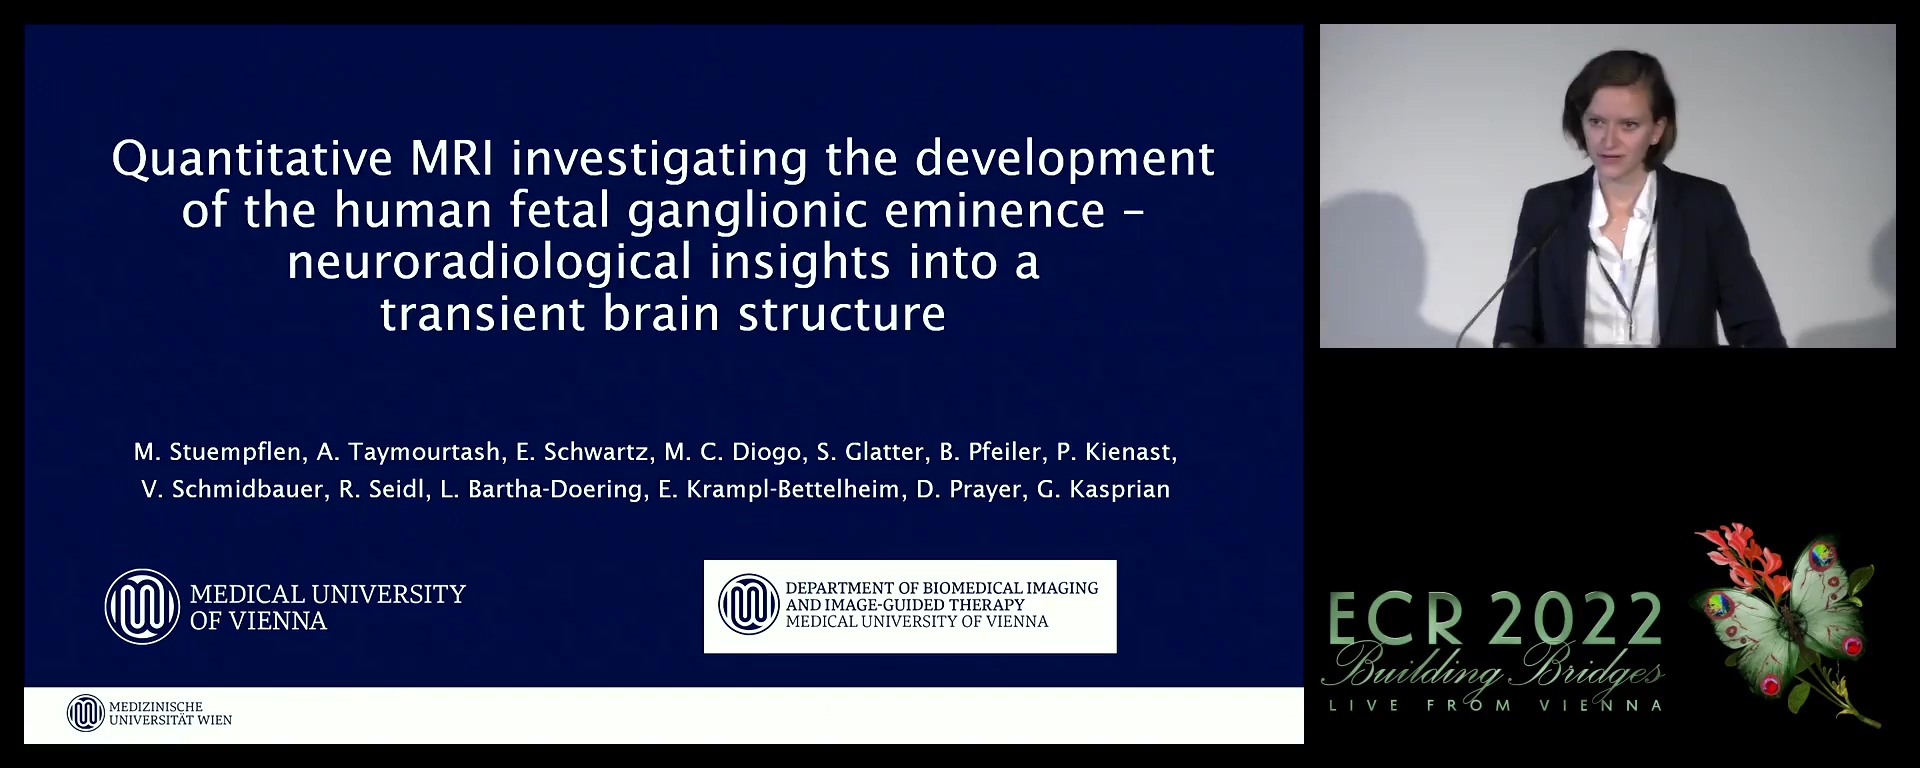 Quantitative MRI of the human fetal ganglionic eminence: neuroradiological insights into a transient brain structure - Marlene Stümpflen, Vienna / AT